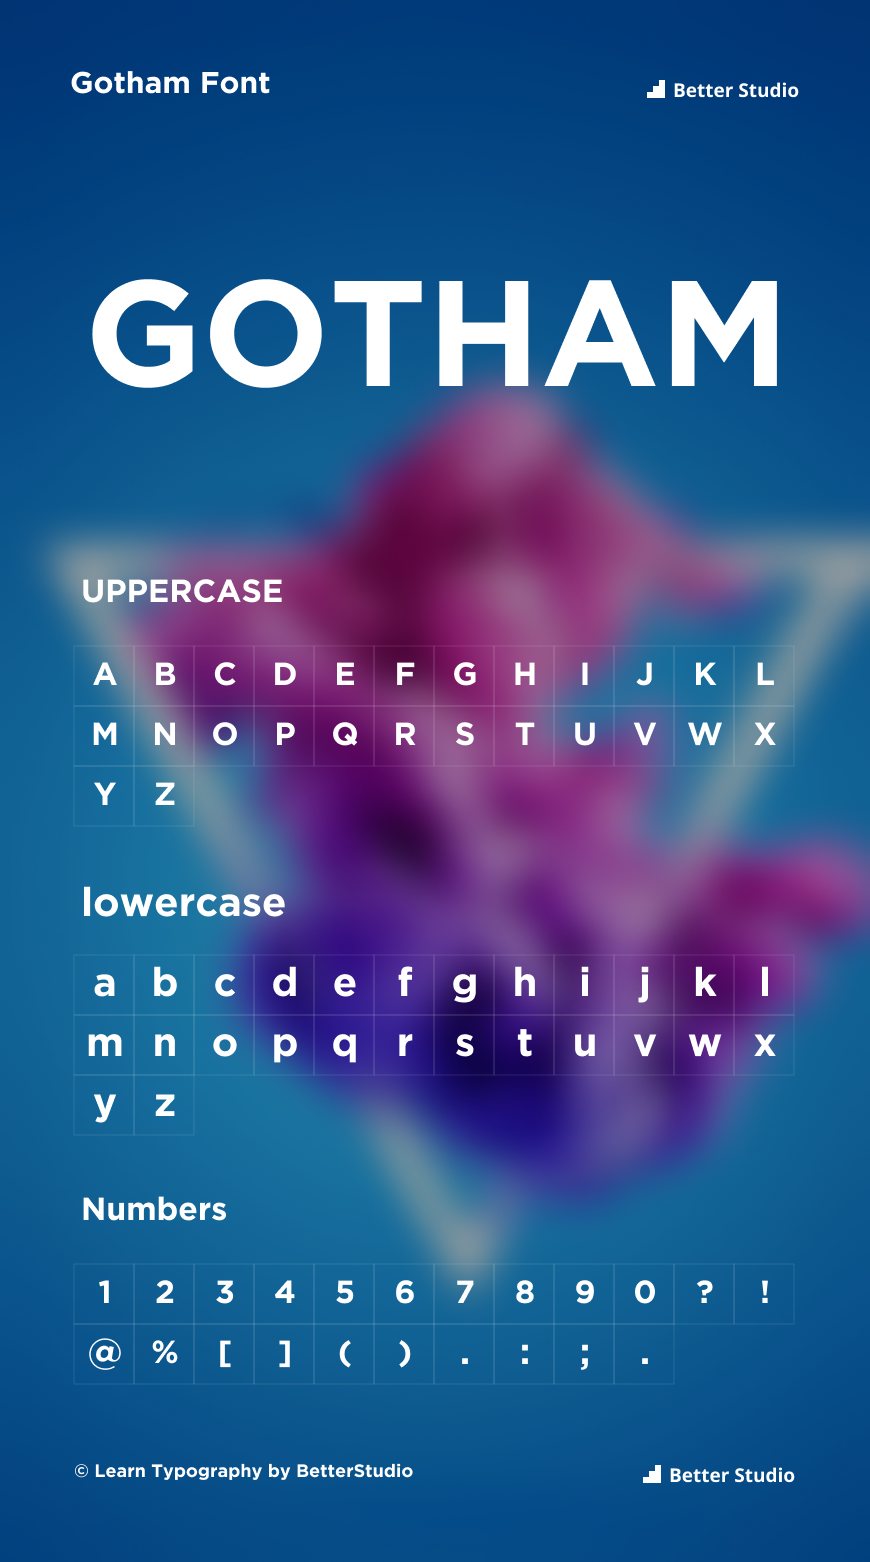 download gotham font for photoshop